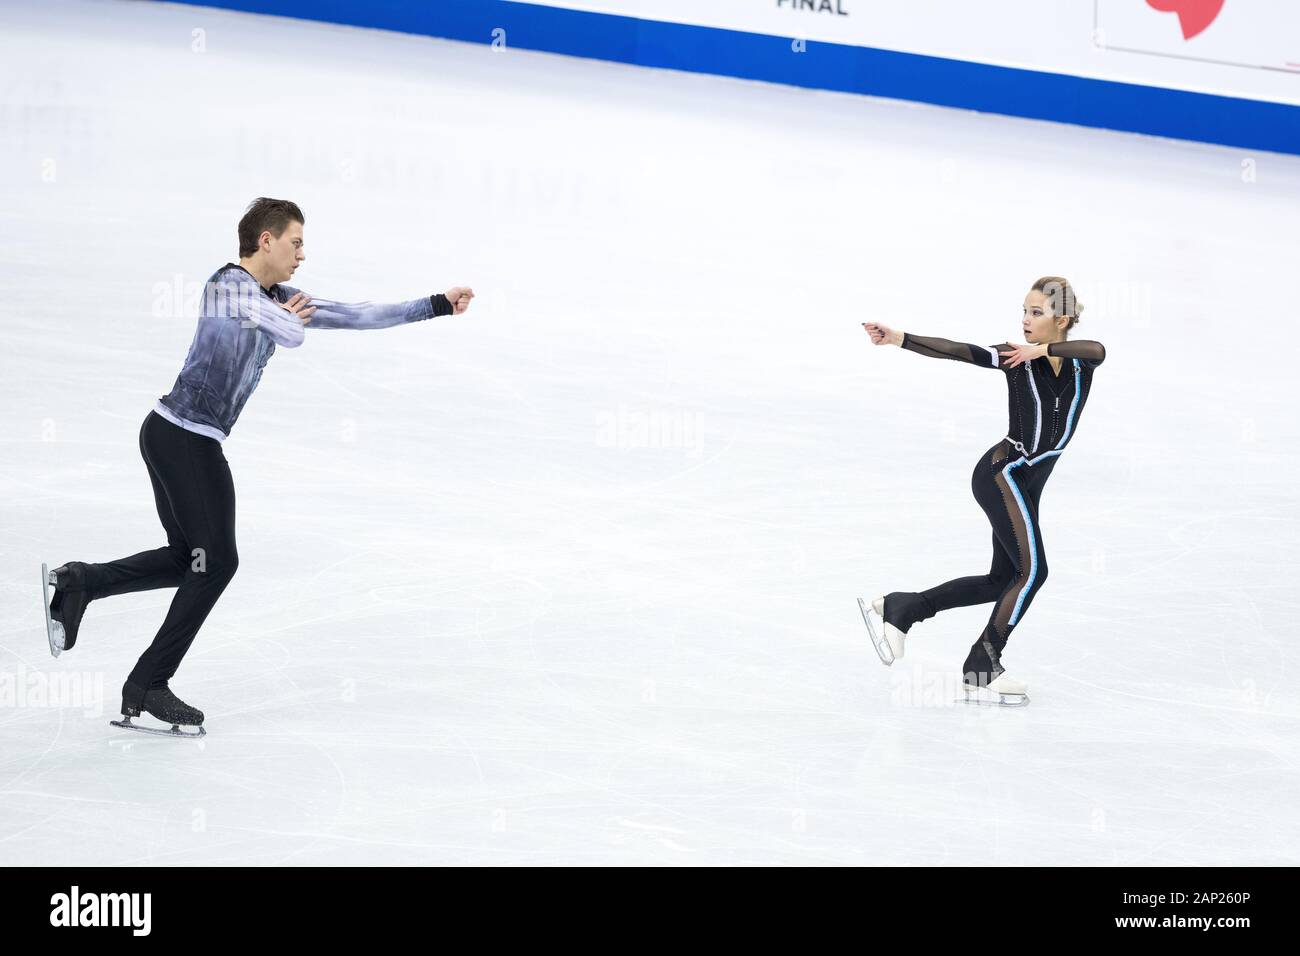 Daria Pavliuchenko and Denis Khodykin of Russia compete during senior pairs free skating at Palavela ice rink in Turin, Italy on December 6, 2019 Stock Photo